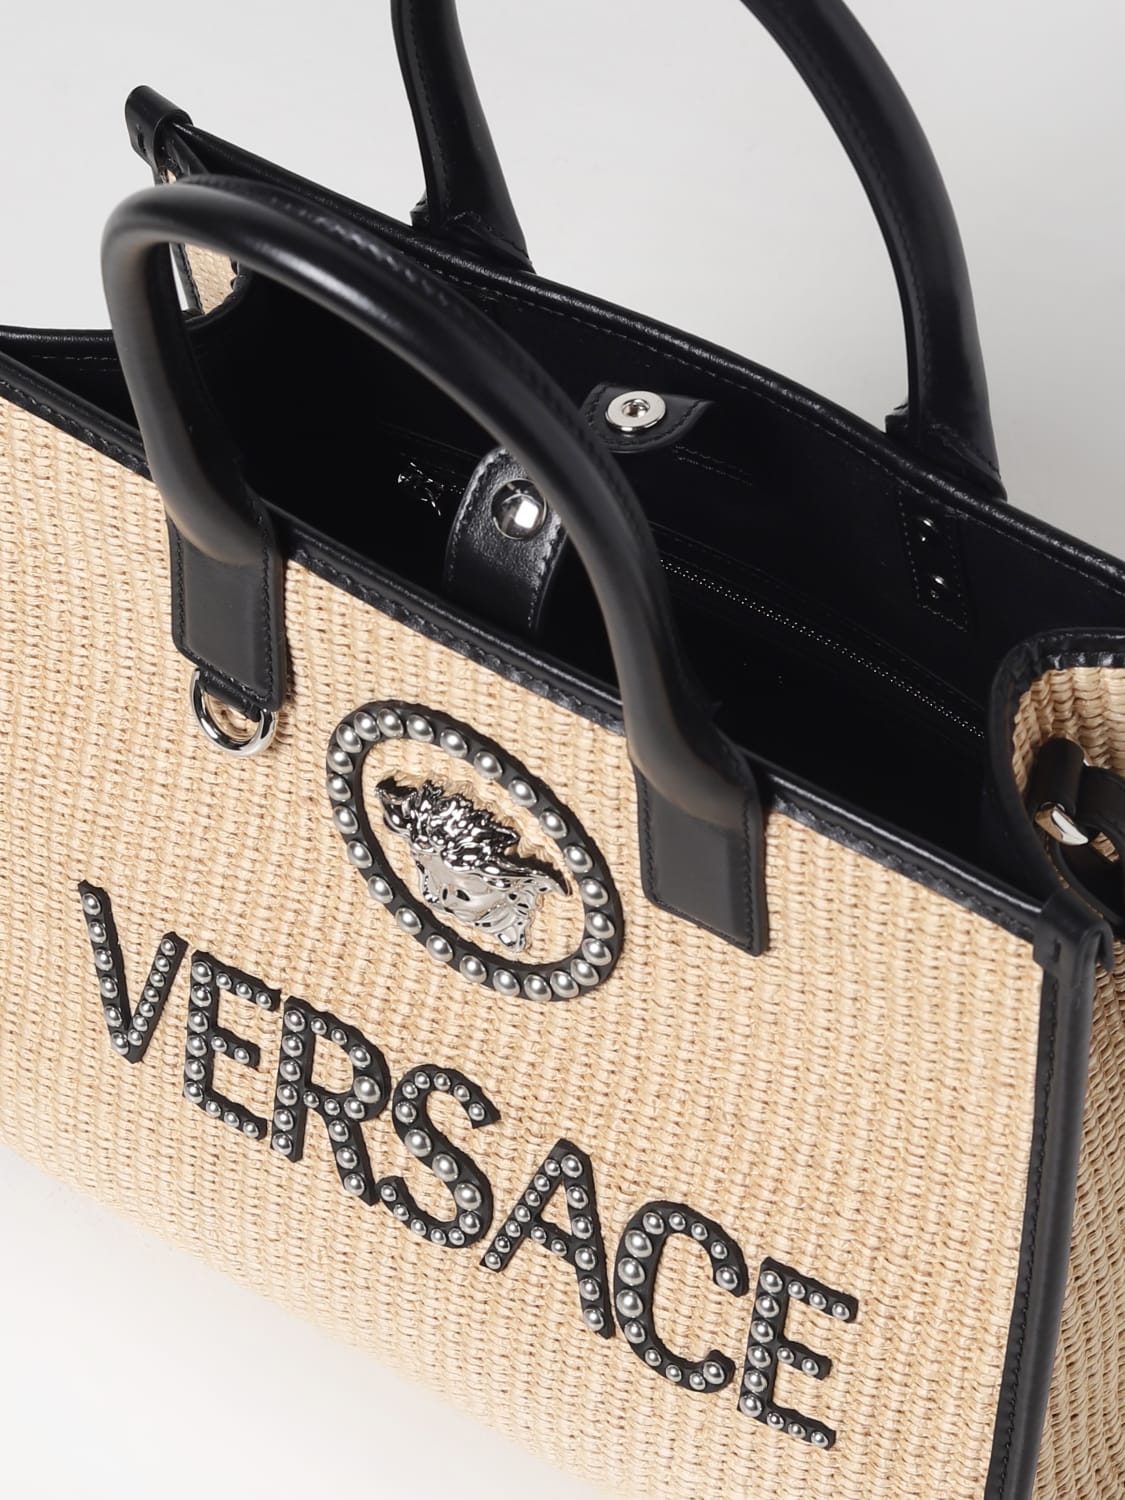 Versace Medusa Small Raffia Tote Bag